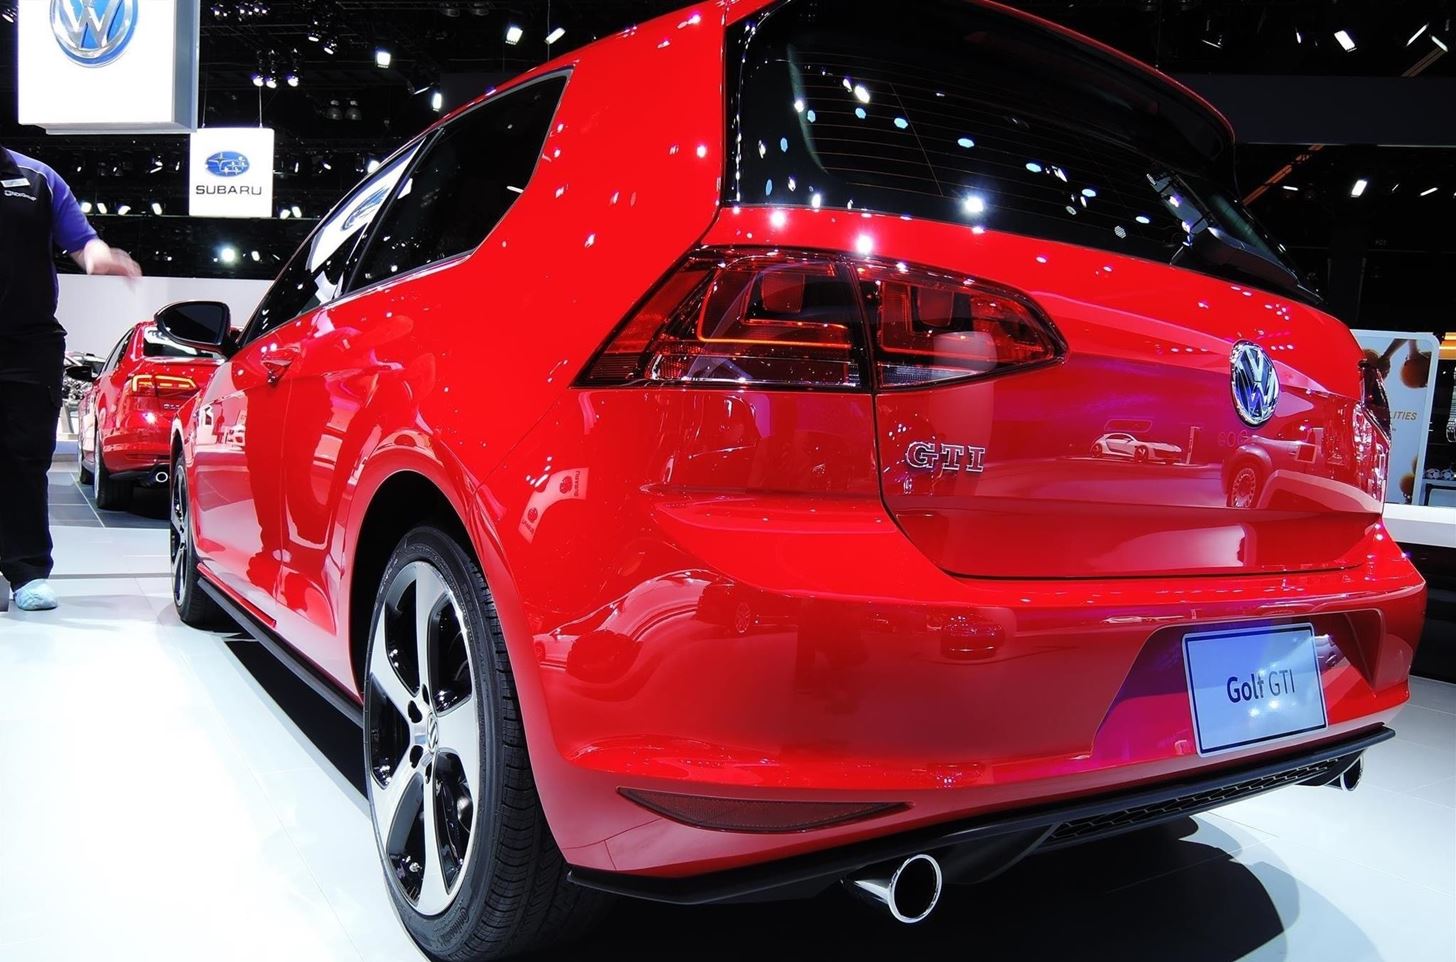 LA Auto Show: VW Does Infotainment the Right Way